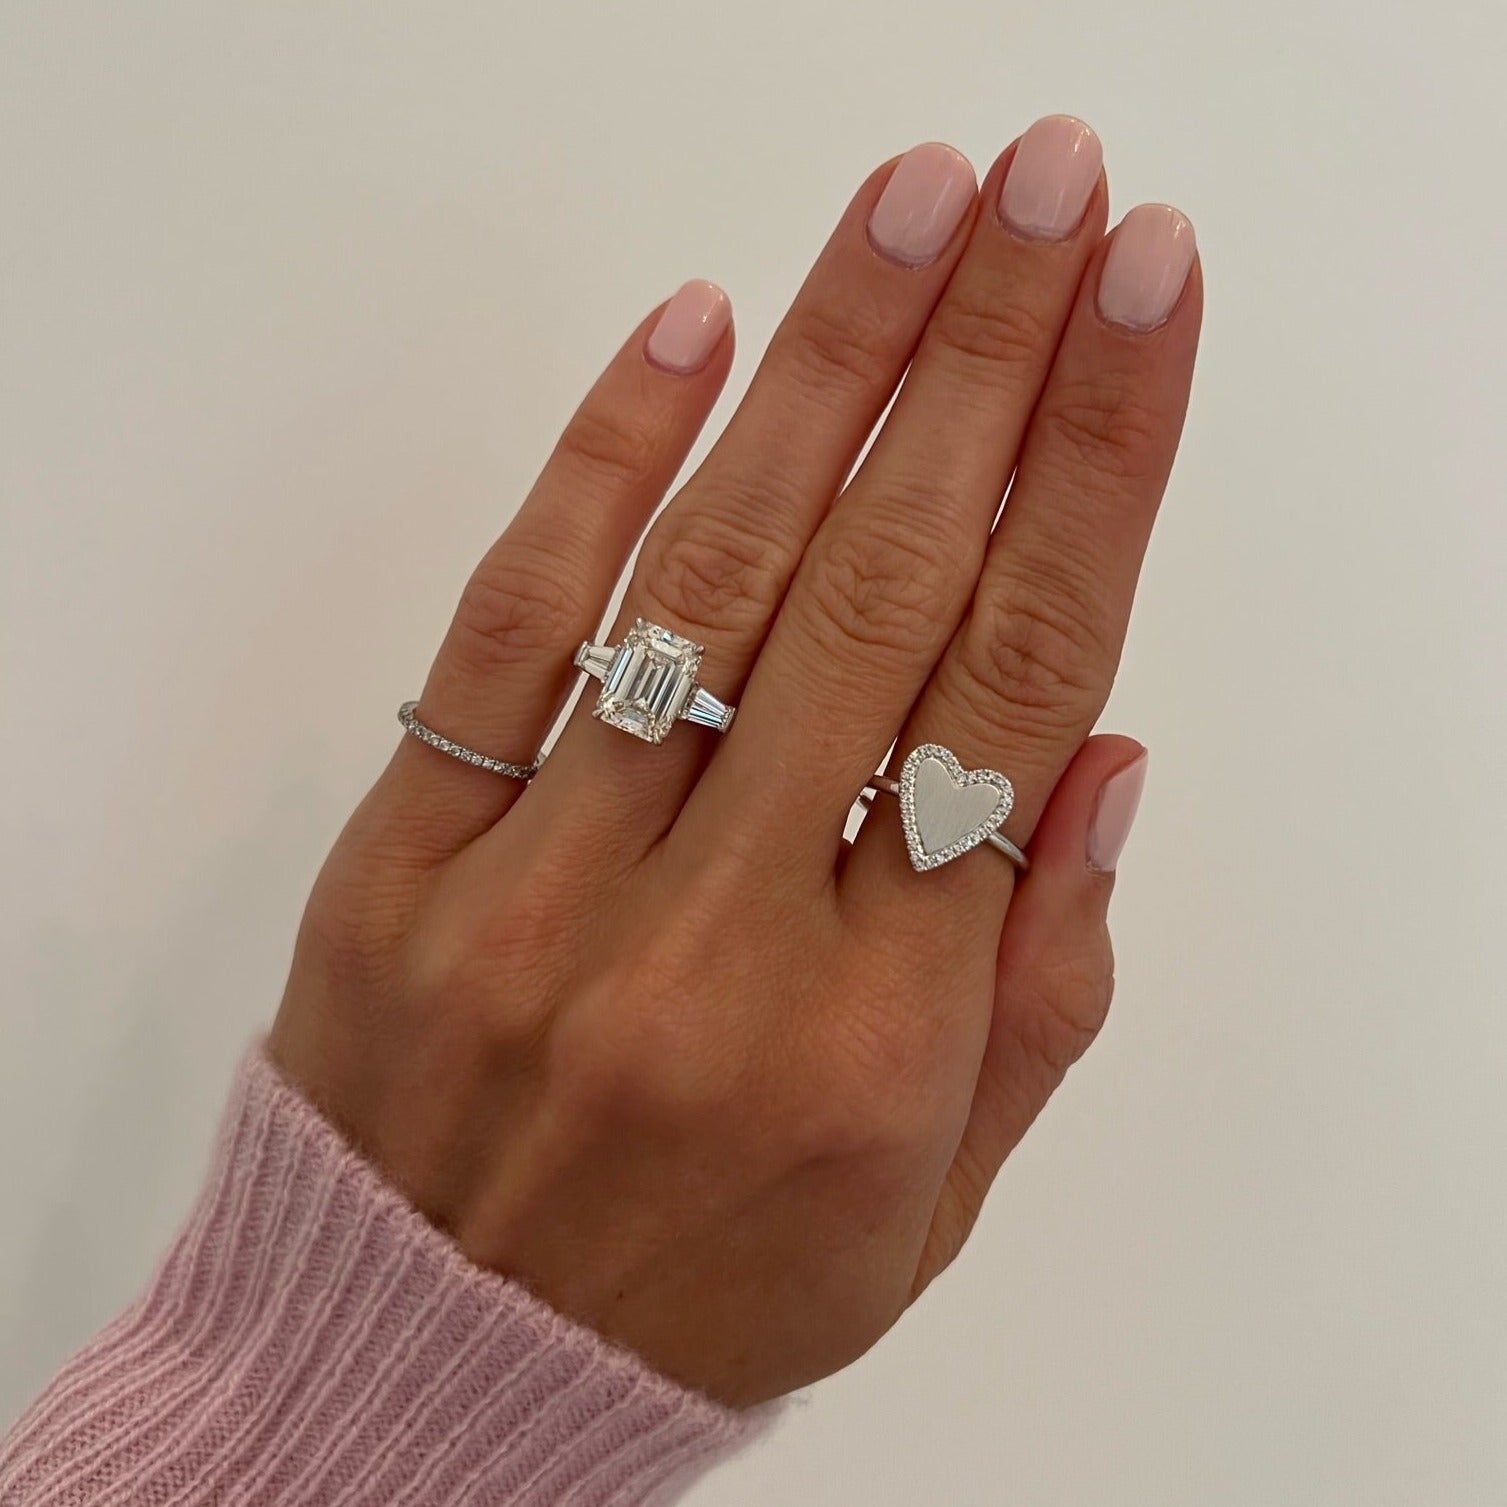 Symmetry Engagement ring with Five Baguette Cut Diamonds – ARTEMER